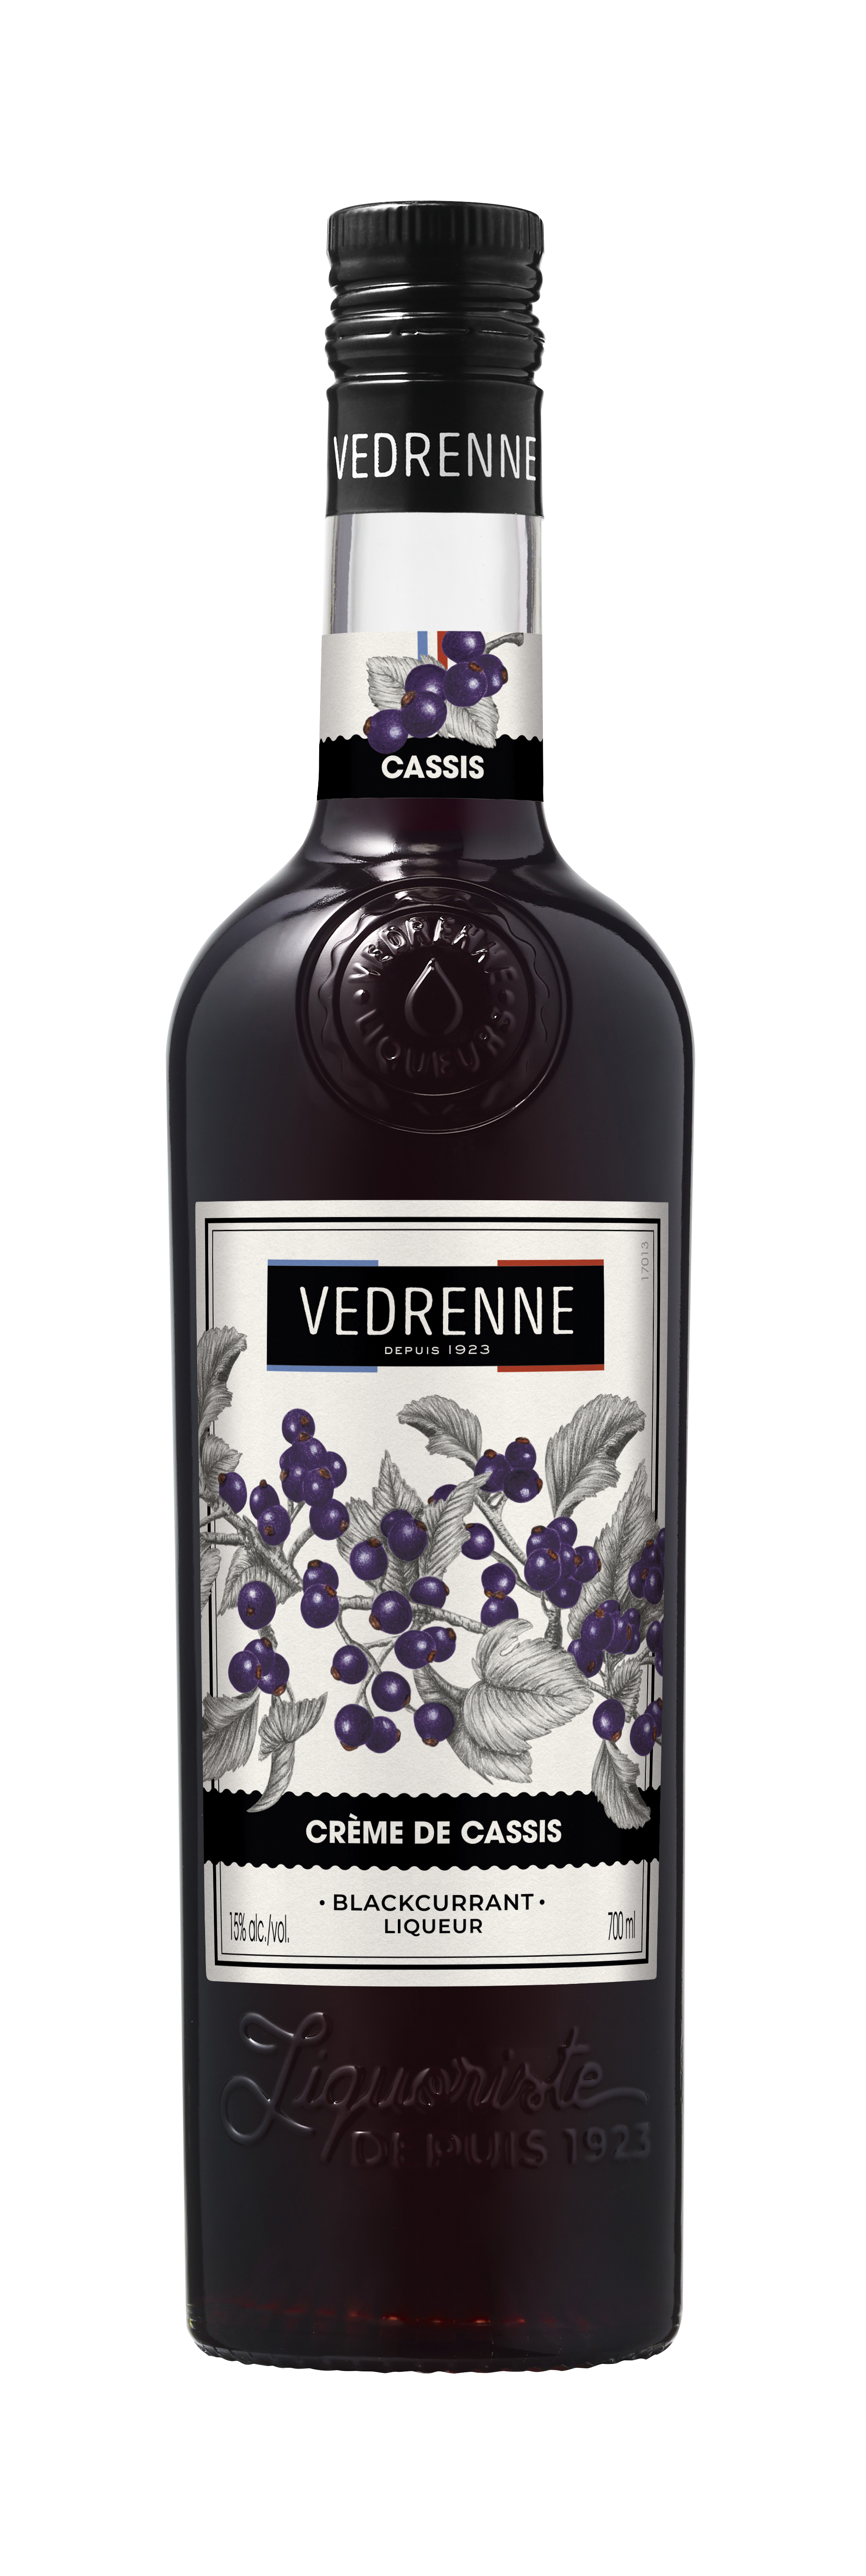 VEDRENNE Blackcurrant Liqueur 15% - 700ml